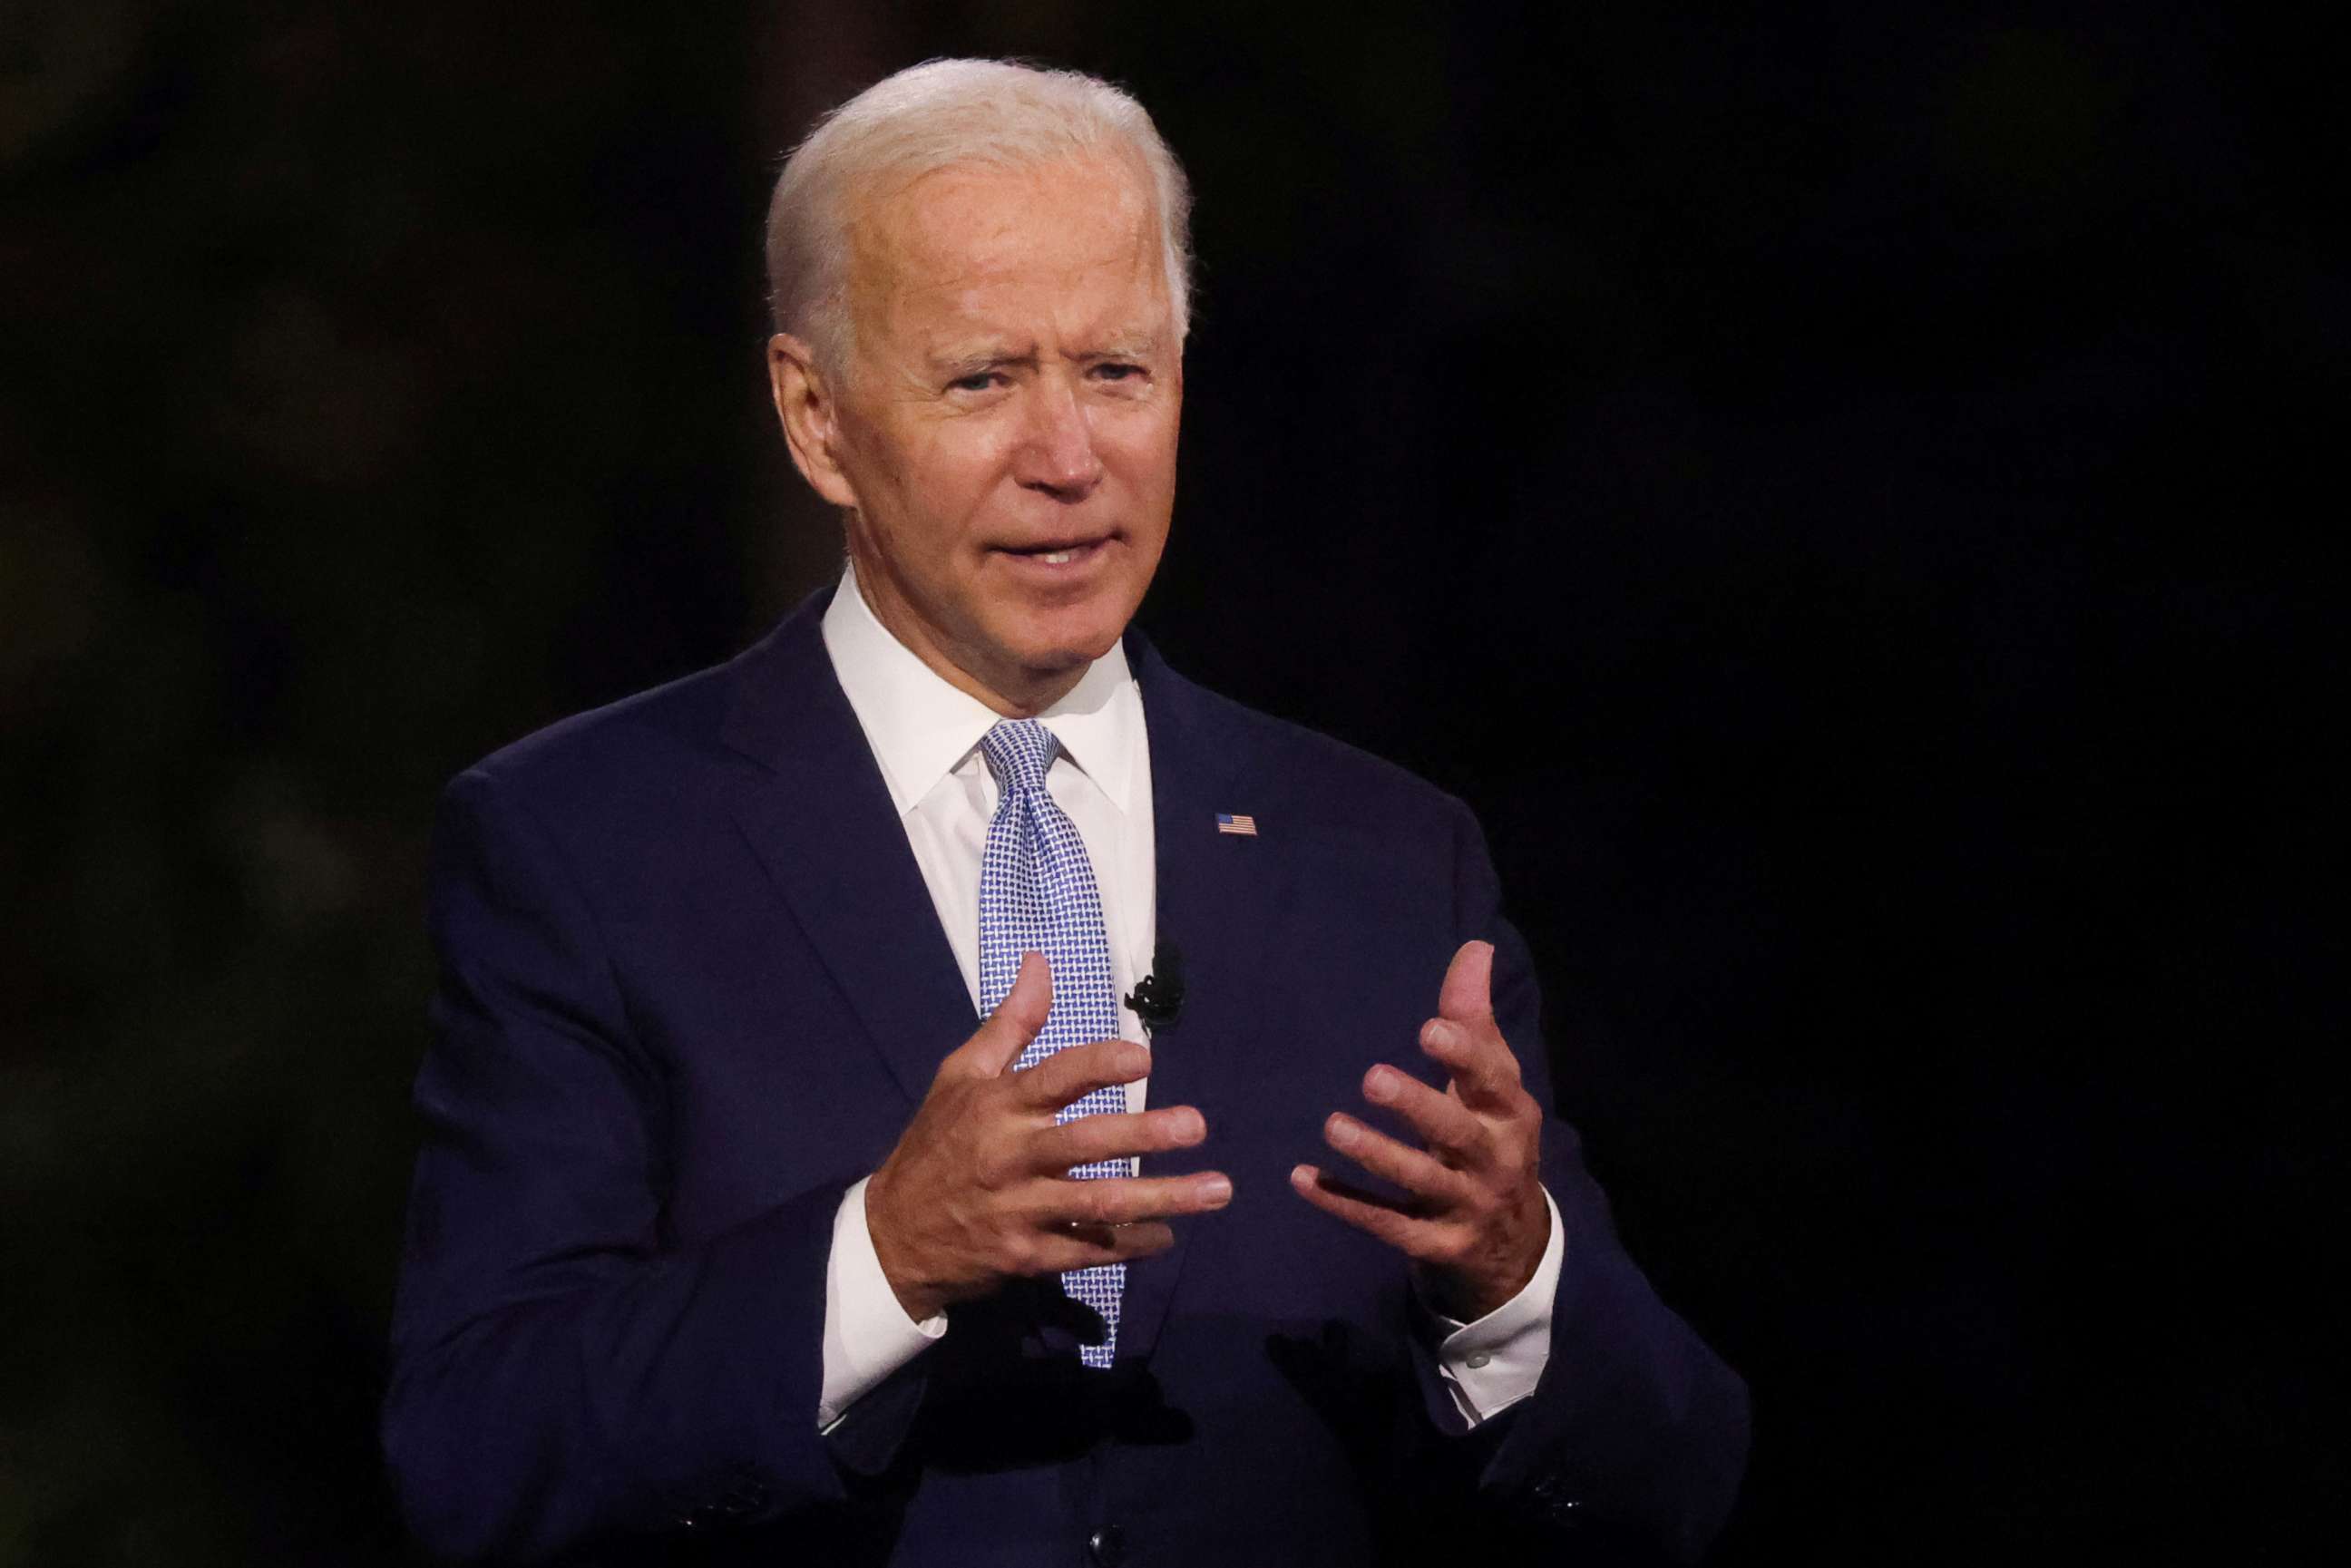 PHOTO: Democratic U.S. presidential nominee and former Vice President Joe Biden takes part in an outdoor town hall meeting in Scranton, Pennsylvania, U.S. September 17, 2020. 